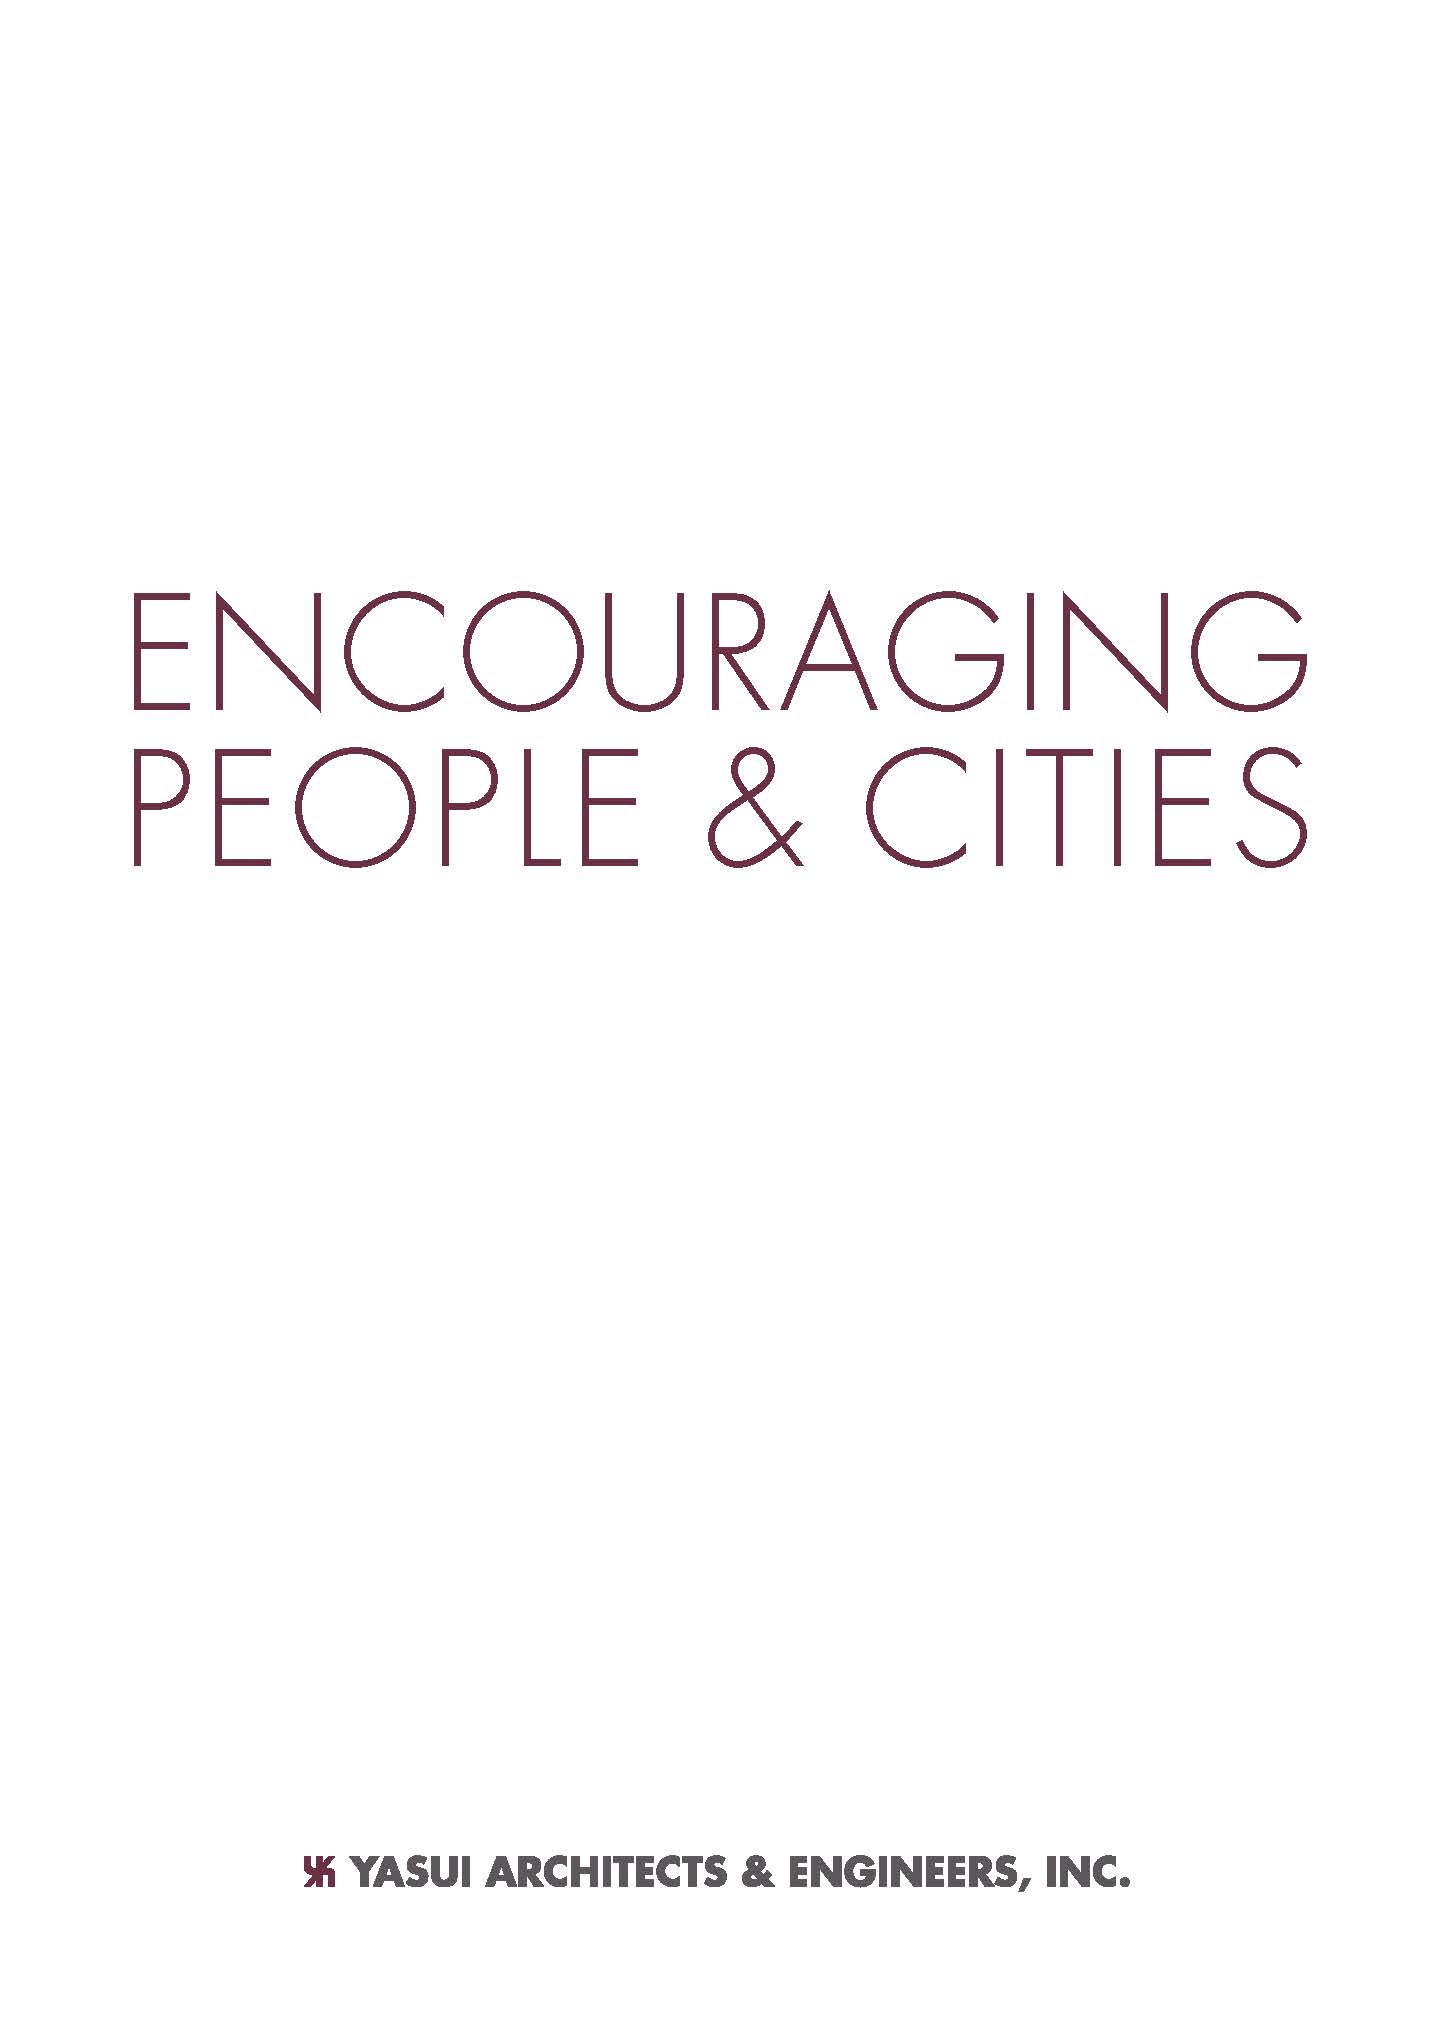 ENCOURAGING PEOPLE & CITIES